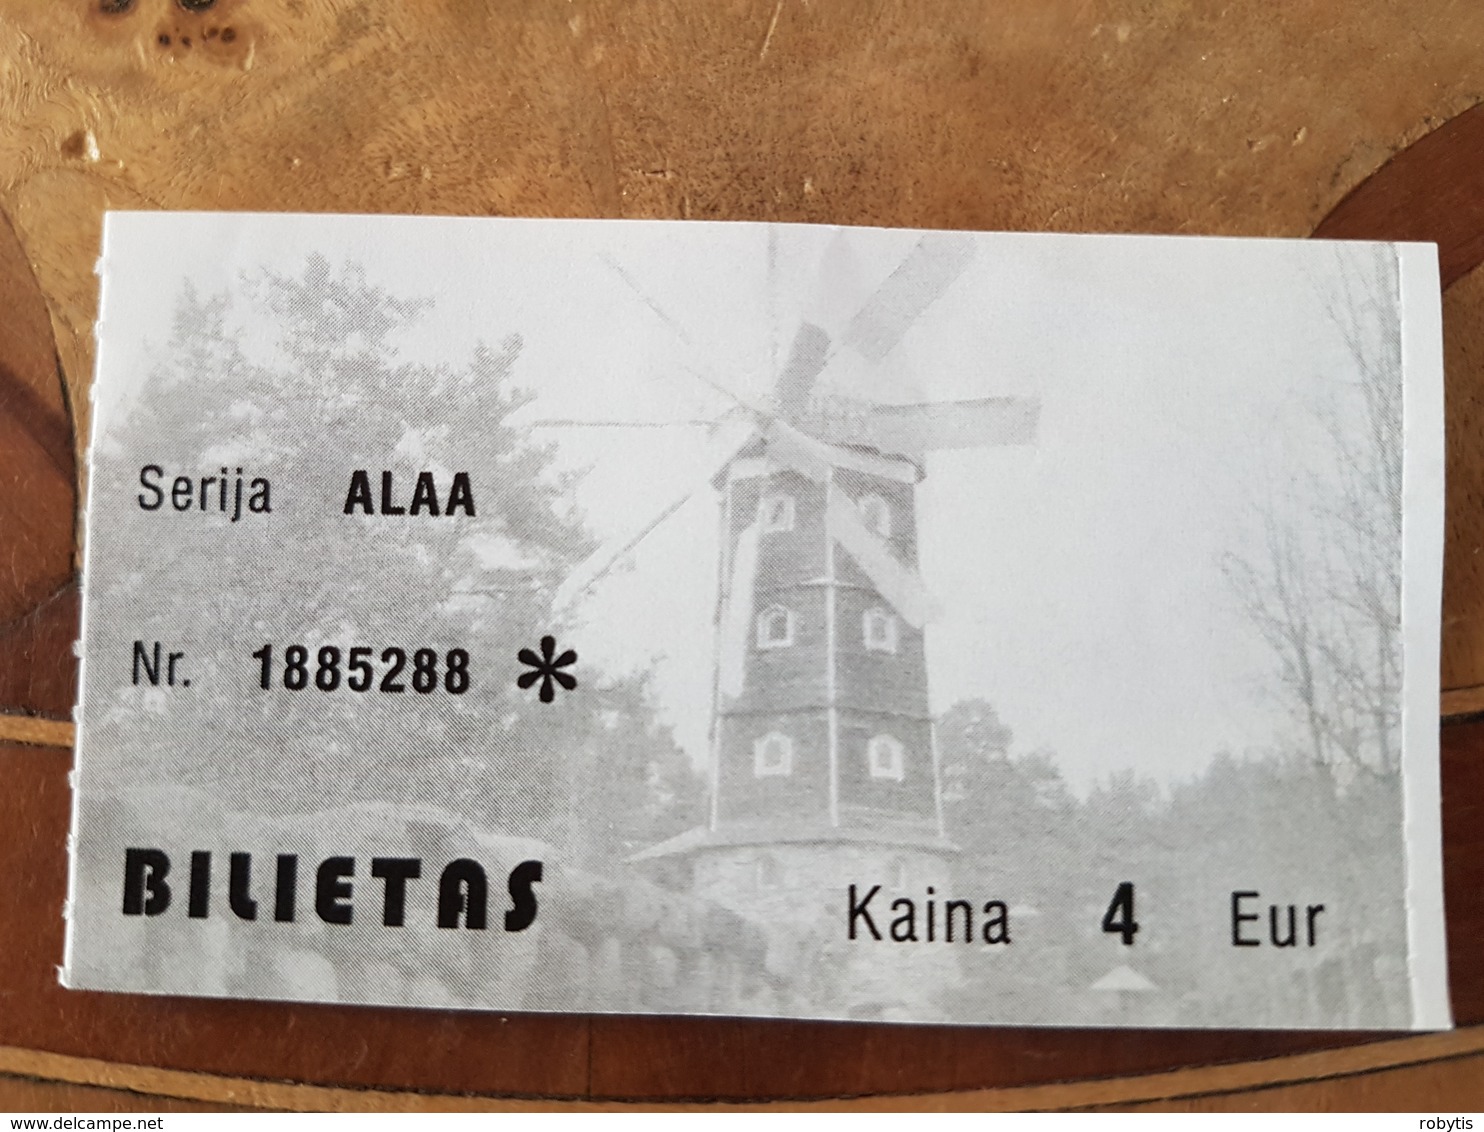 Lithuania Birston Sculpture Park 2019 Ticket - Tickets - Vouchers